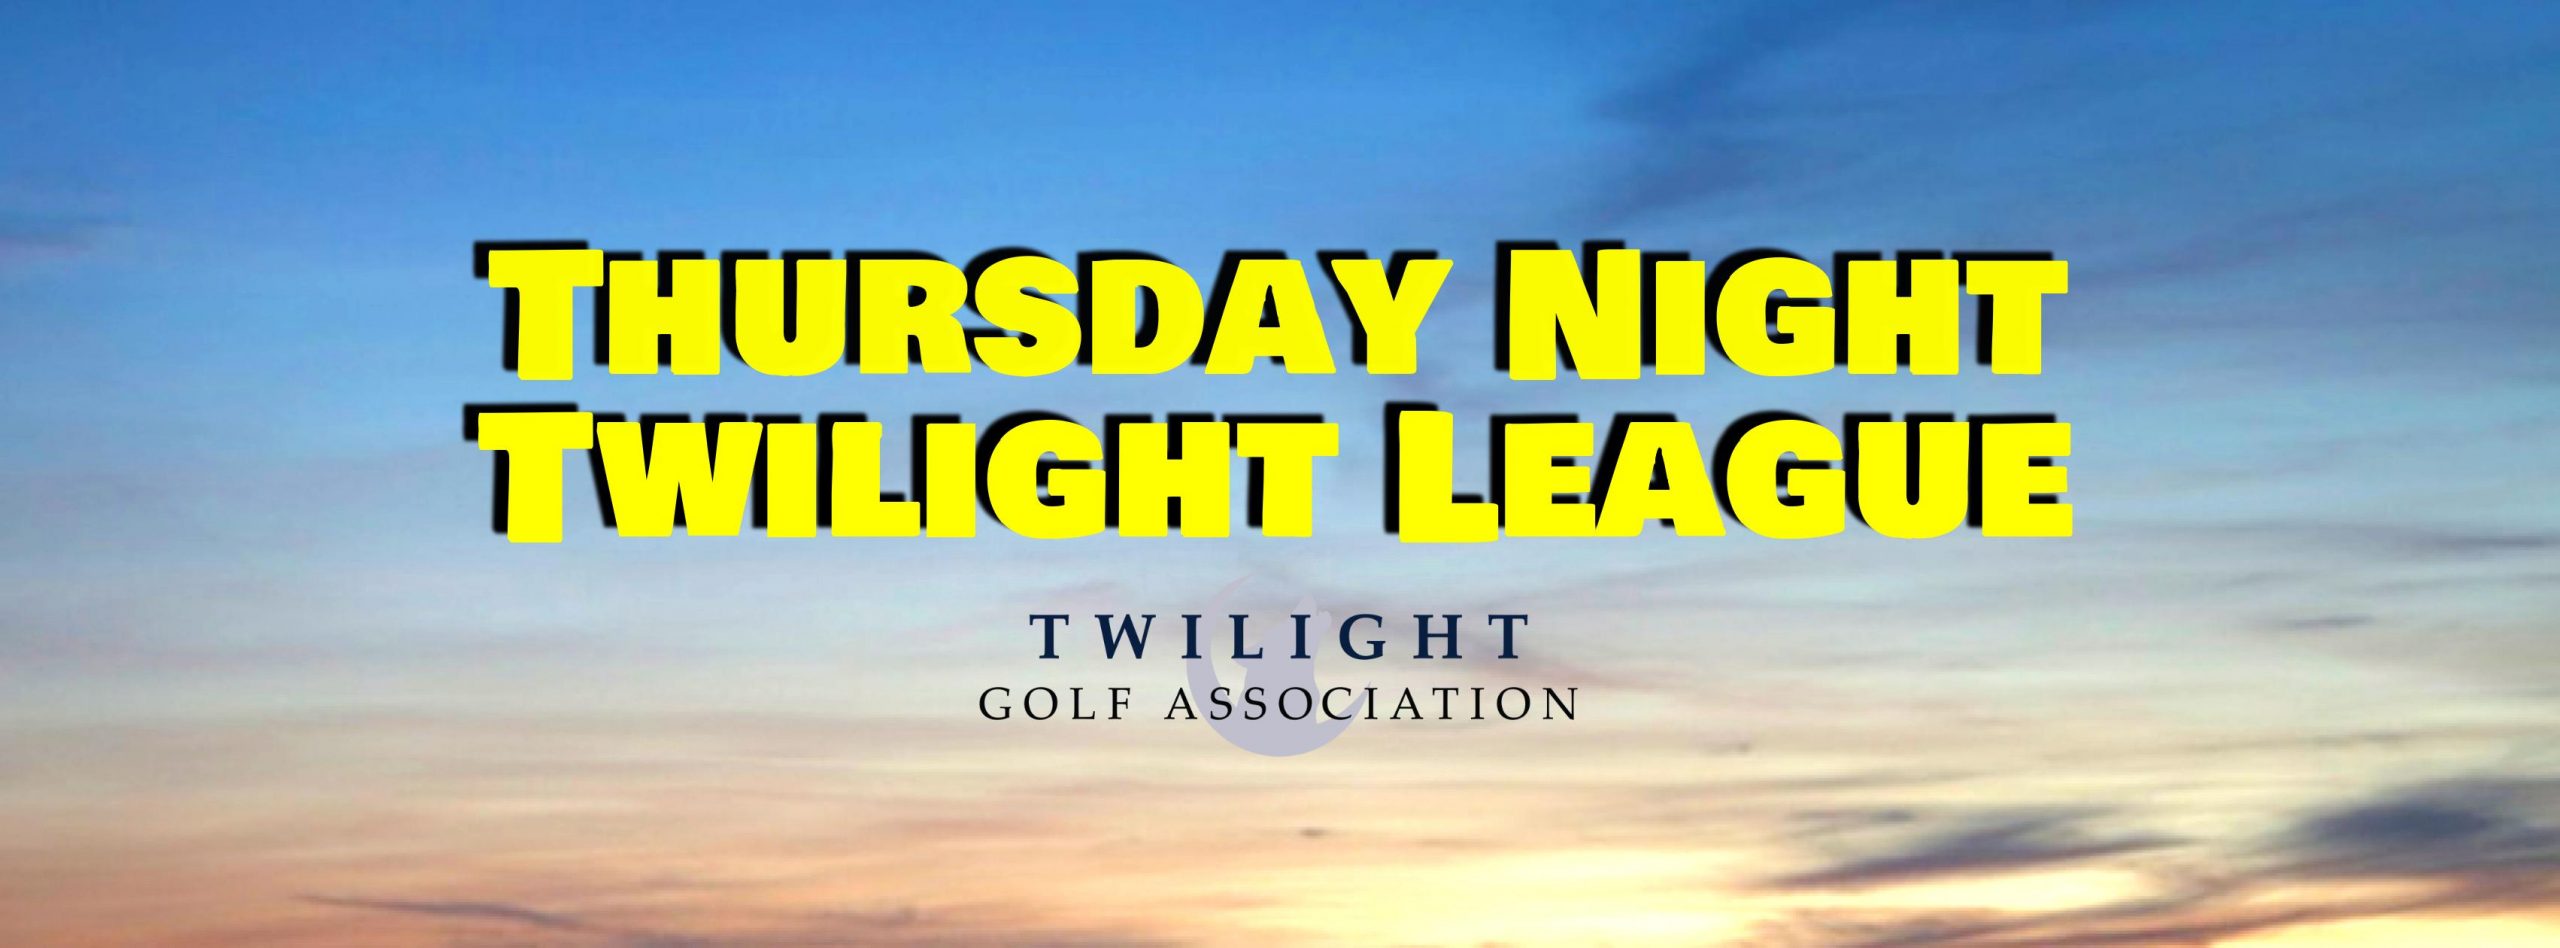 Thursday Night Twilight League at Myakka Pines Golf Club